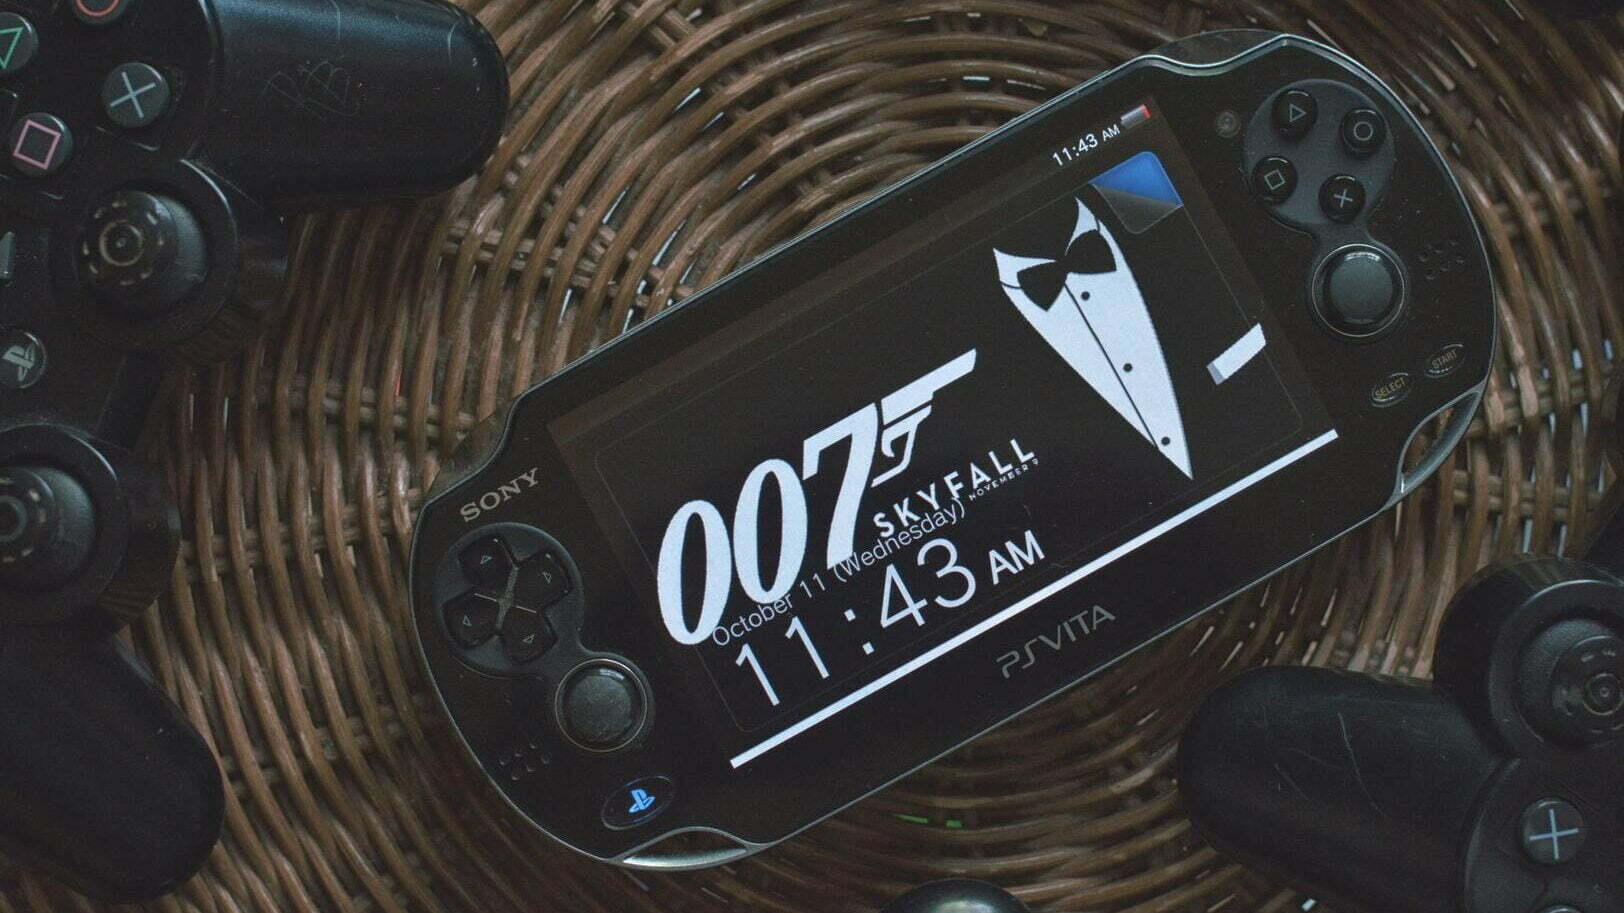 PS Vita with James Bond Wallpaper